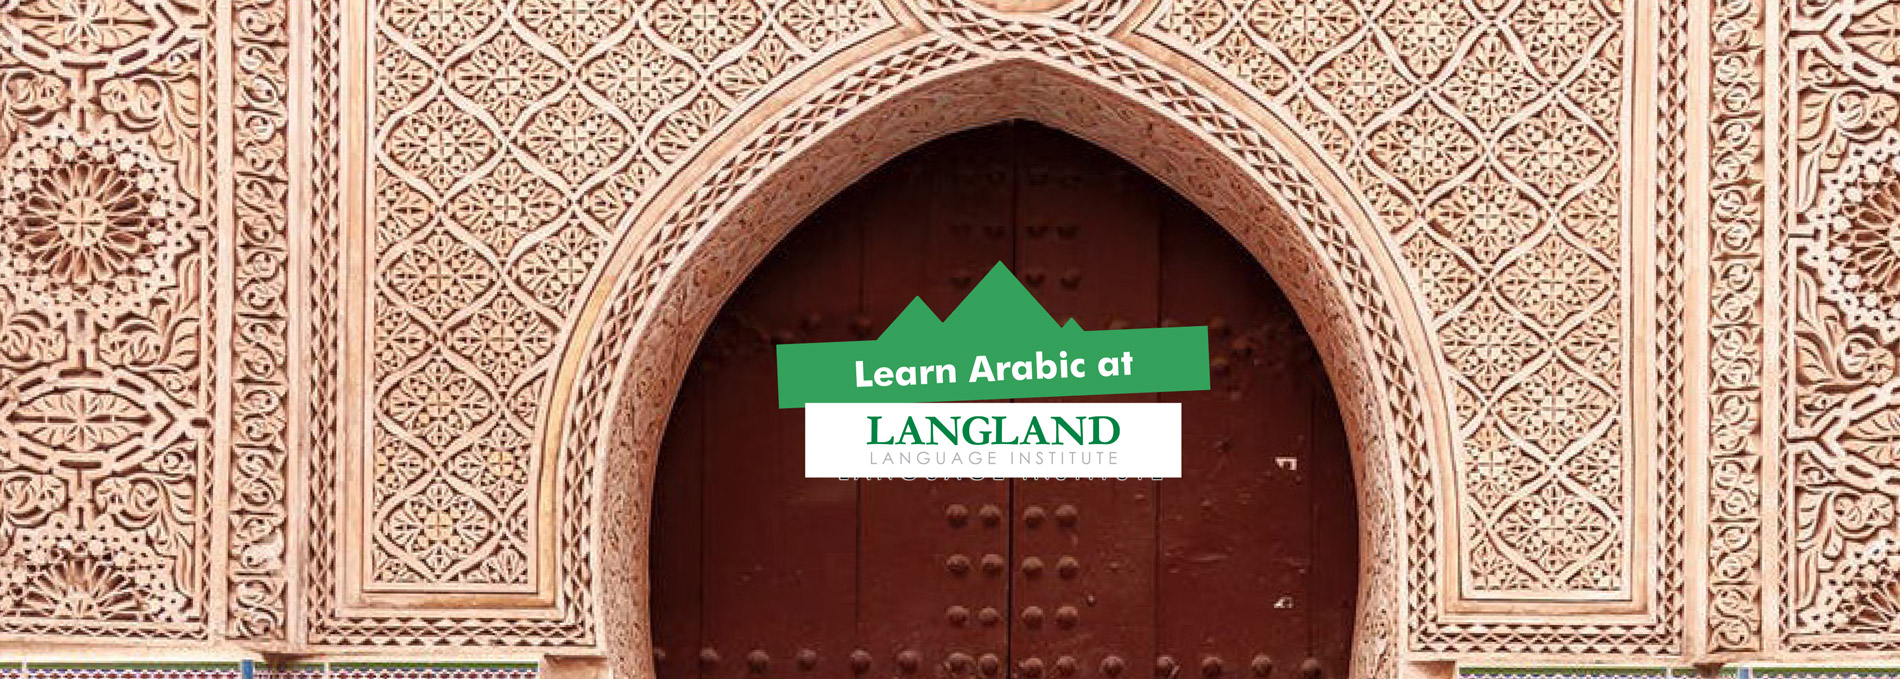 Learn-Arabic-at-Langland